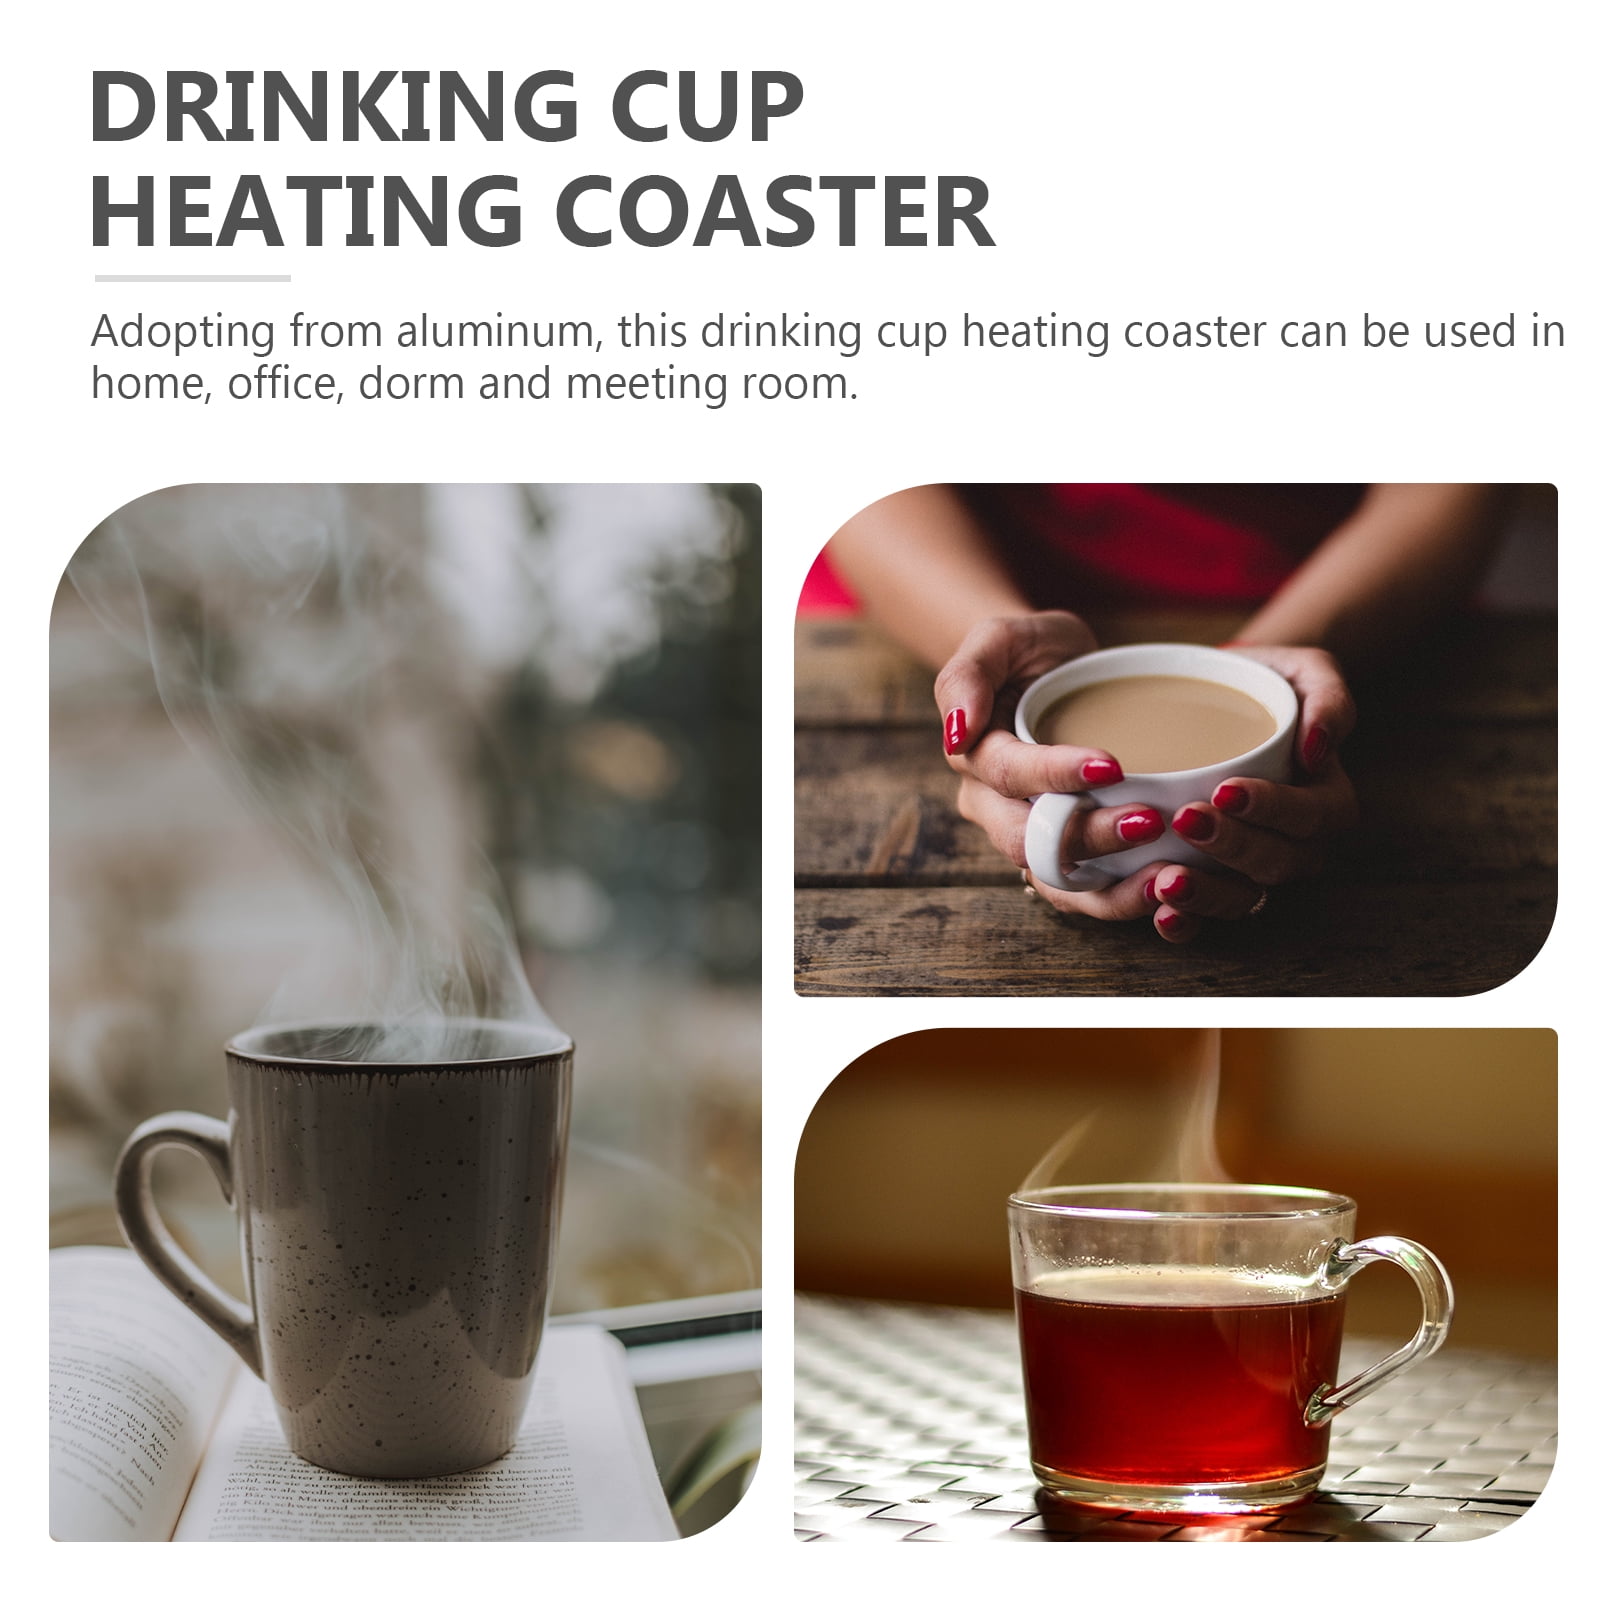 55℃ Winter Electric Coffee Mug Cup Warmer Heater Pad Coaster USB